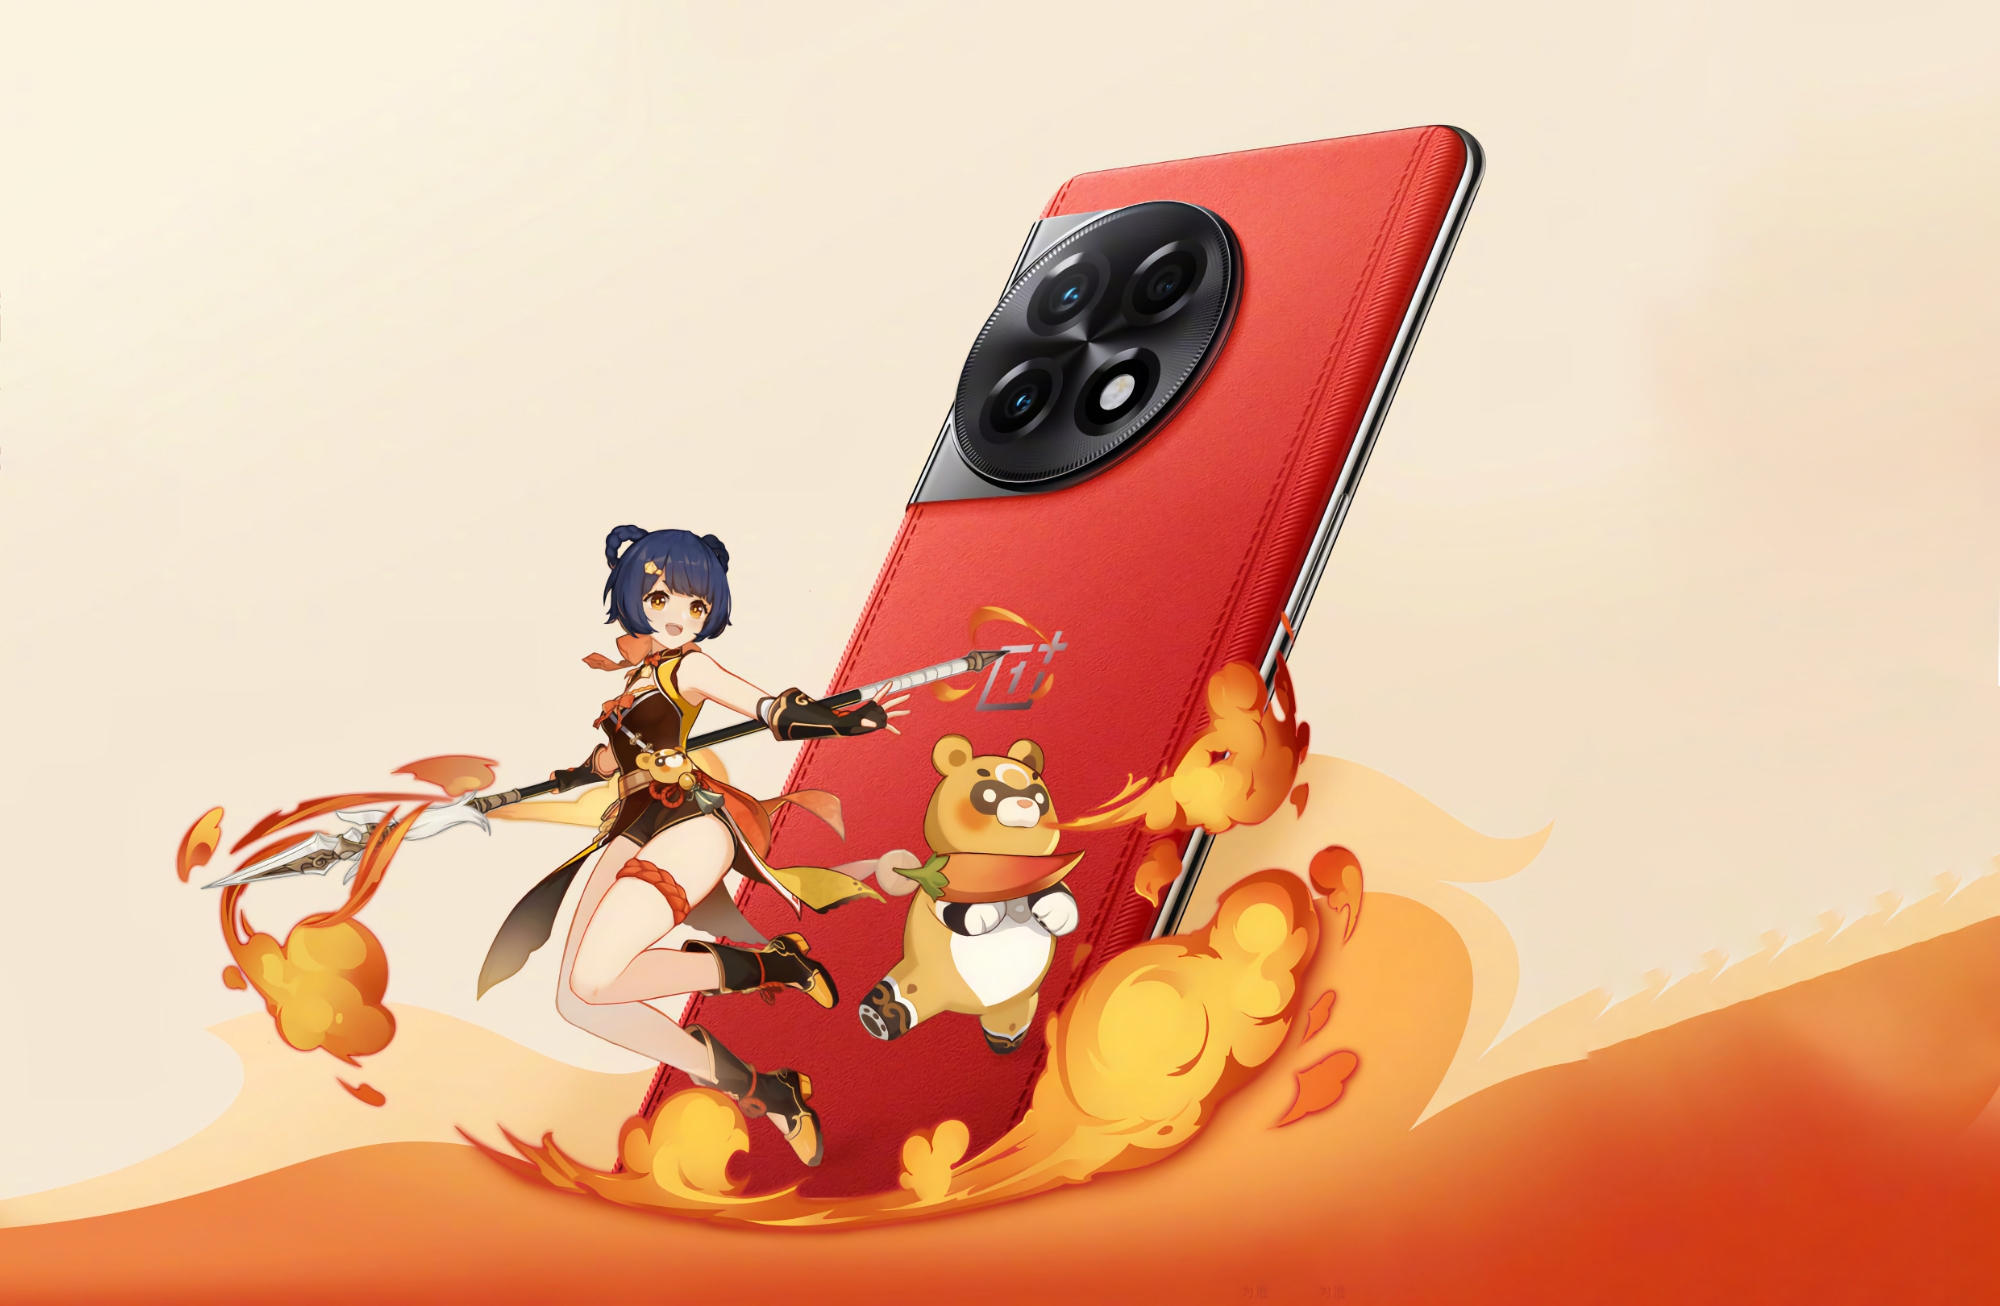 Presentata l'edizione speciale di OnePlus Ace 2 per i fan di Genshin Impact